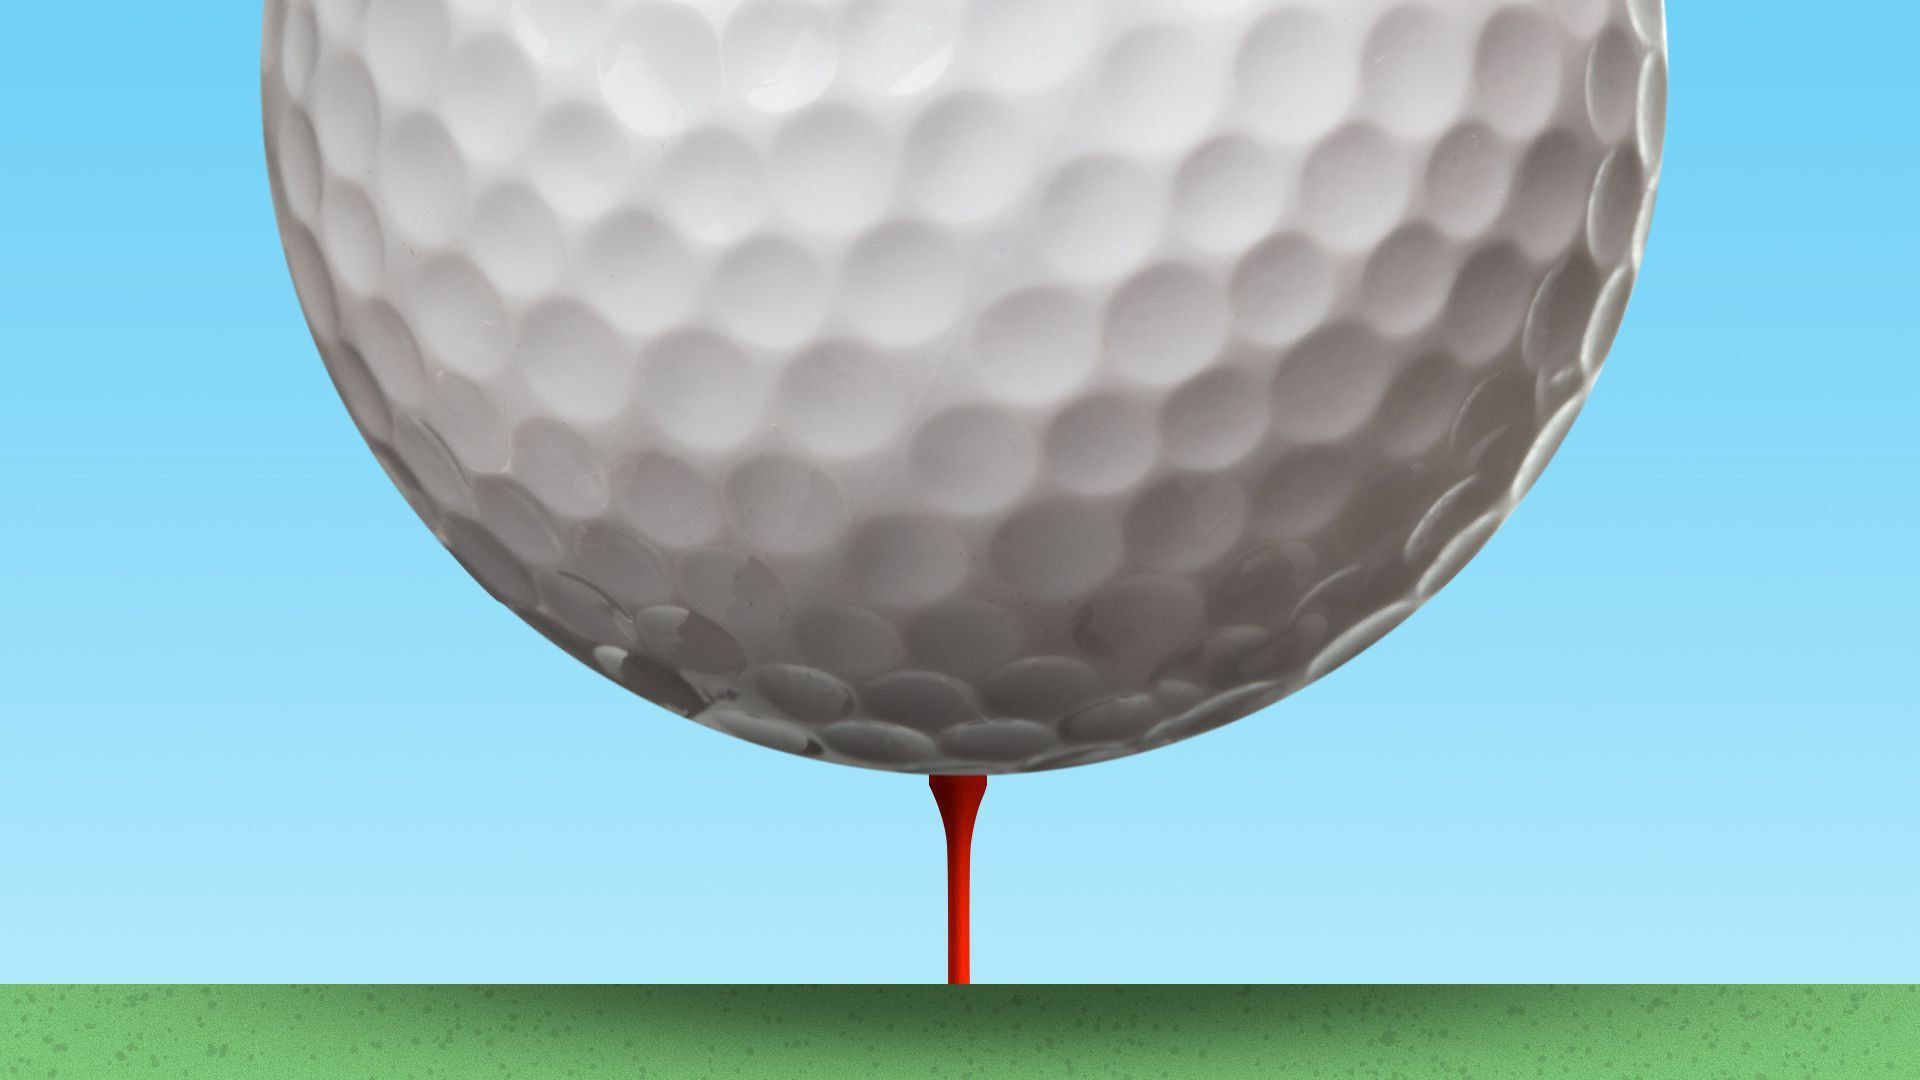 Oversized golf ball on a tee